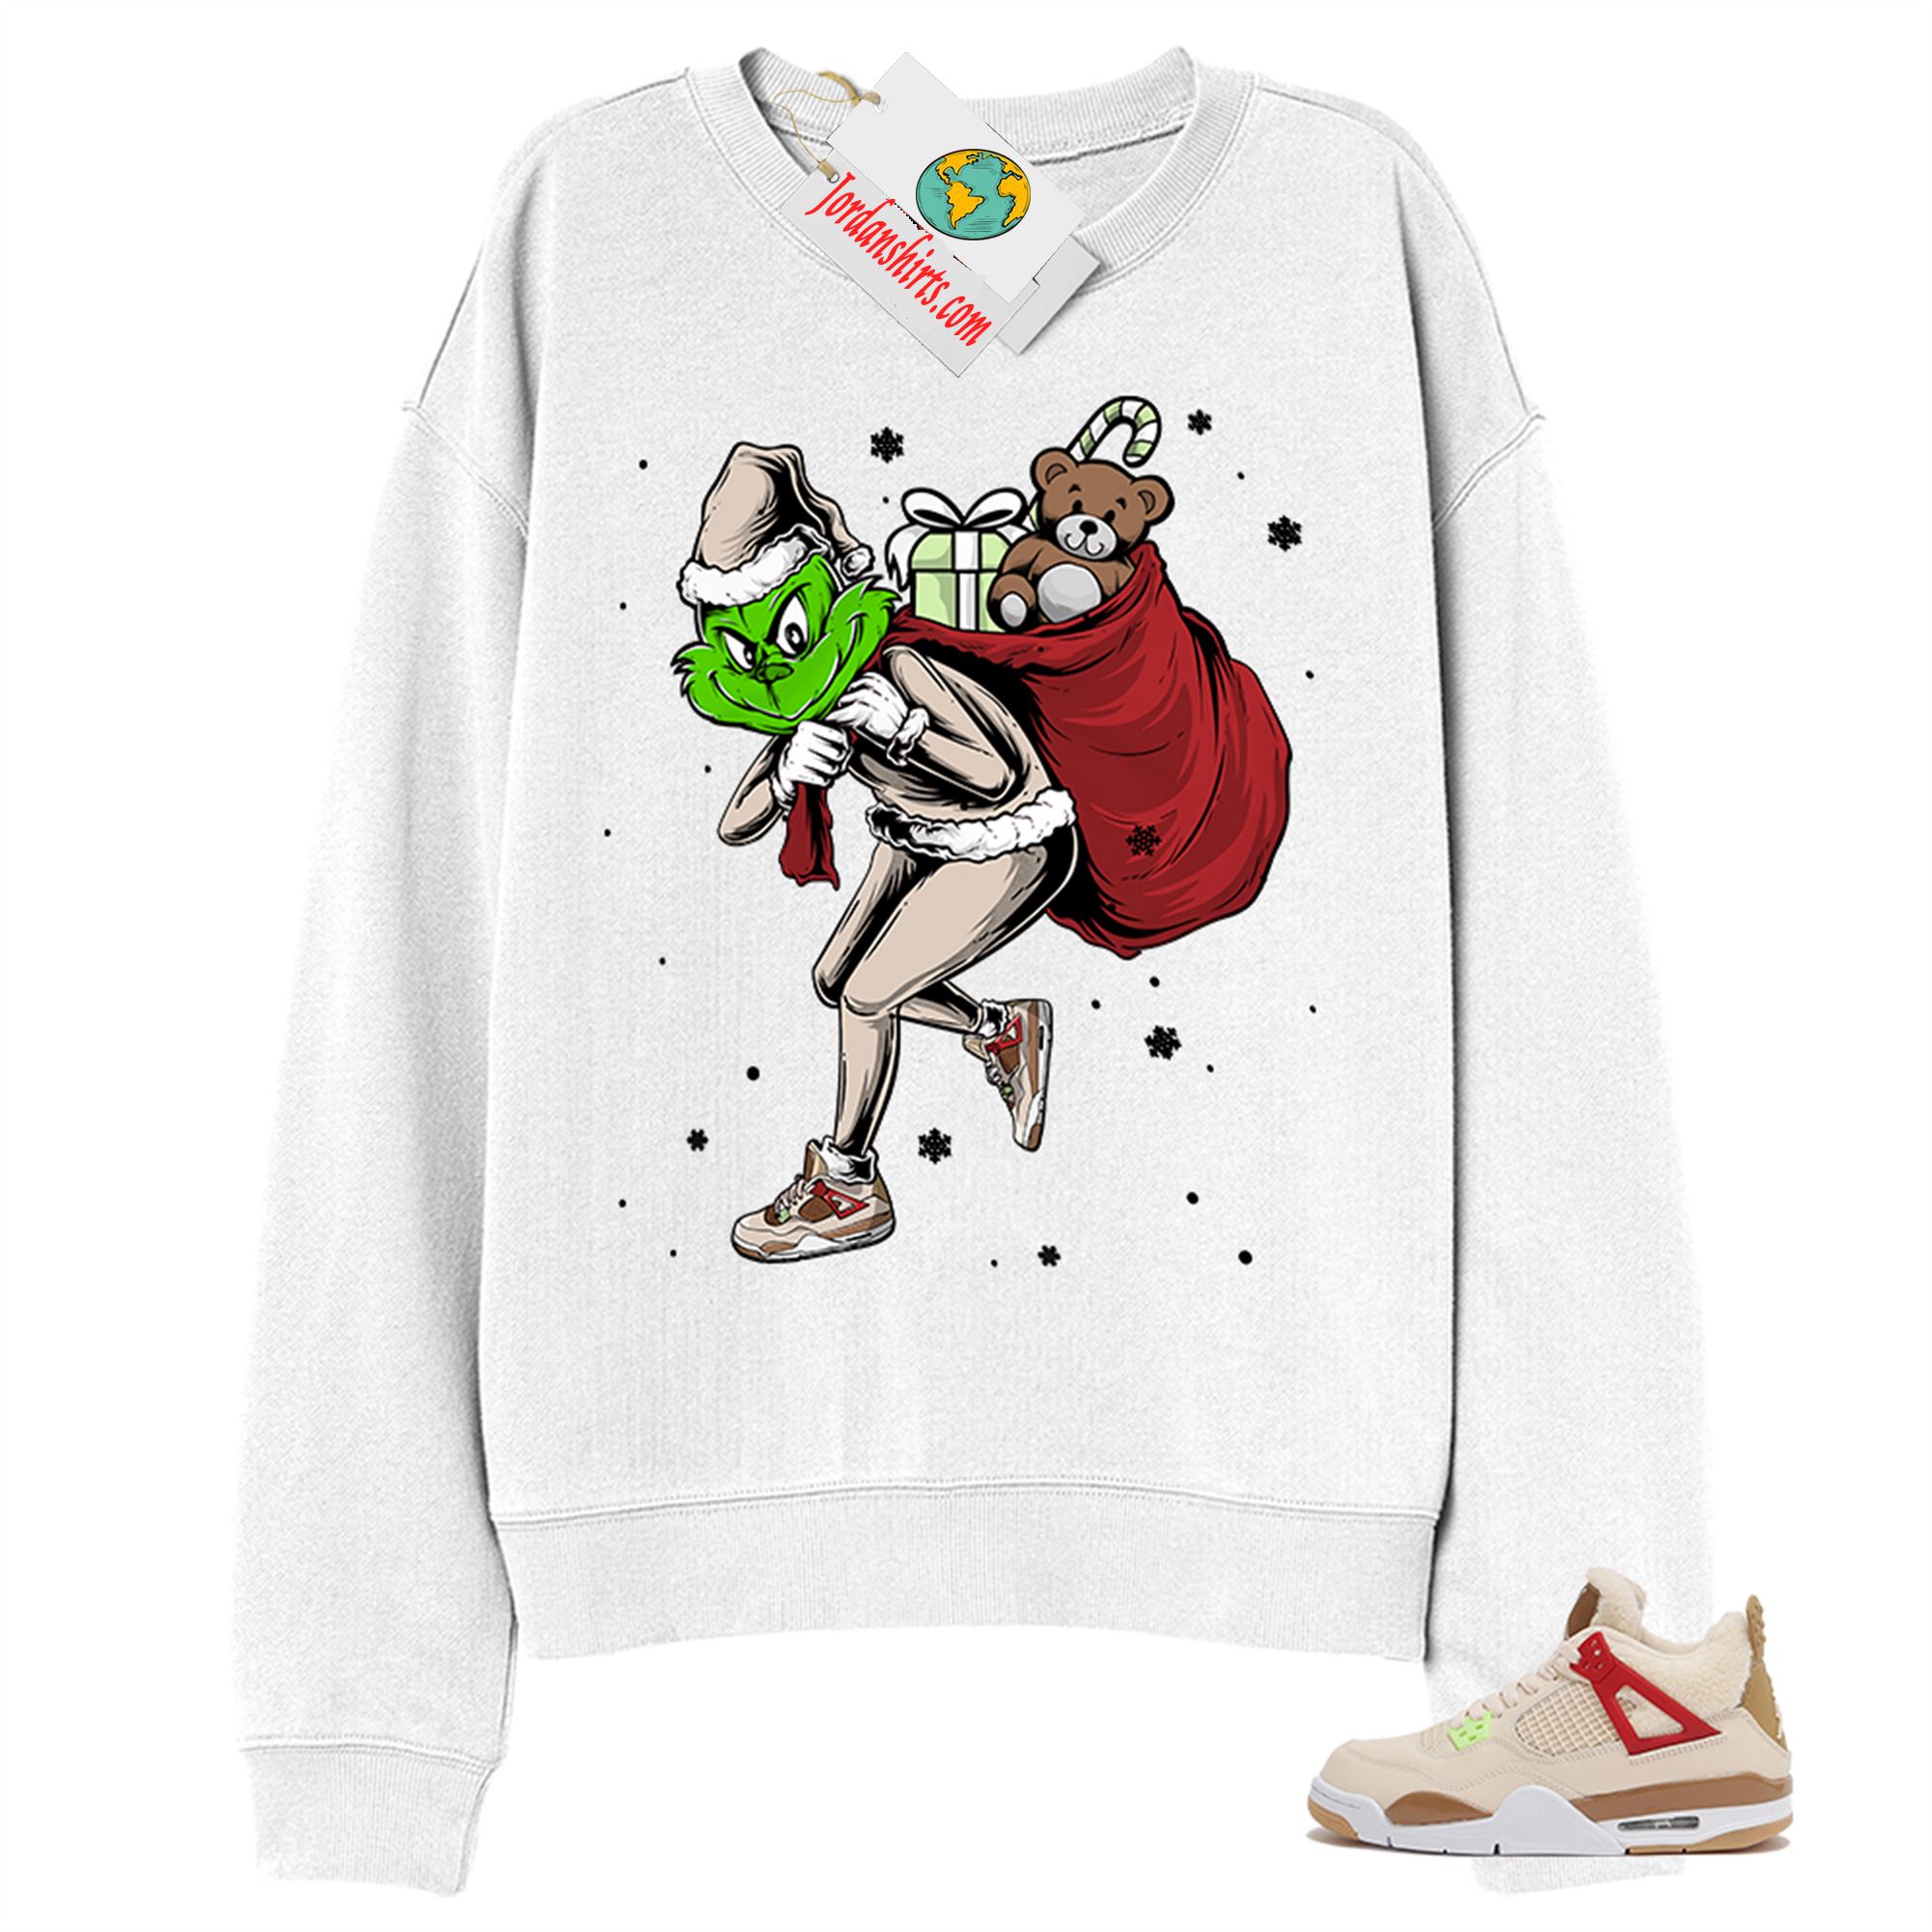 Jordan 4 Sweatshirt, Grinch Stolen Christmas White Sweatshirt Air Jordan 4 Wild Things 4s Full Size Up To 5xl